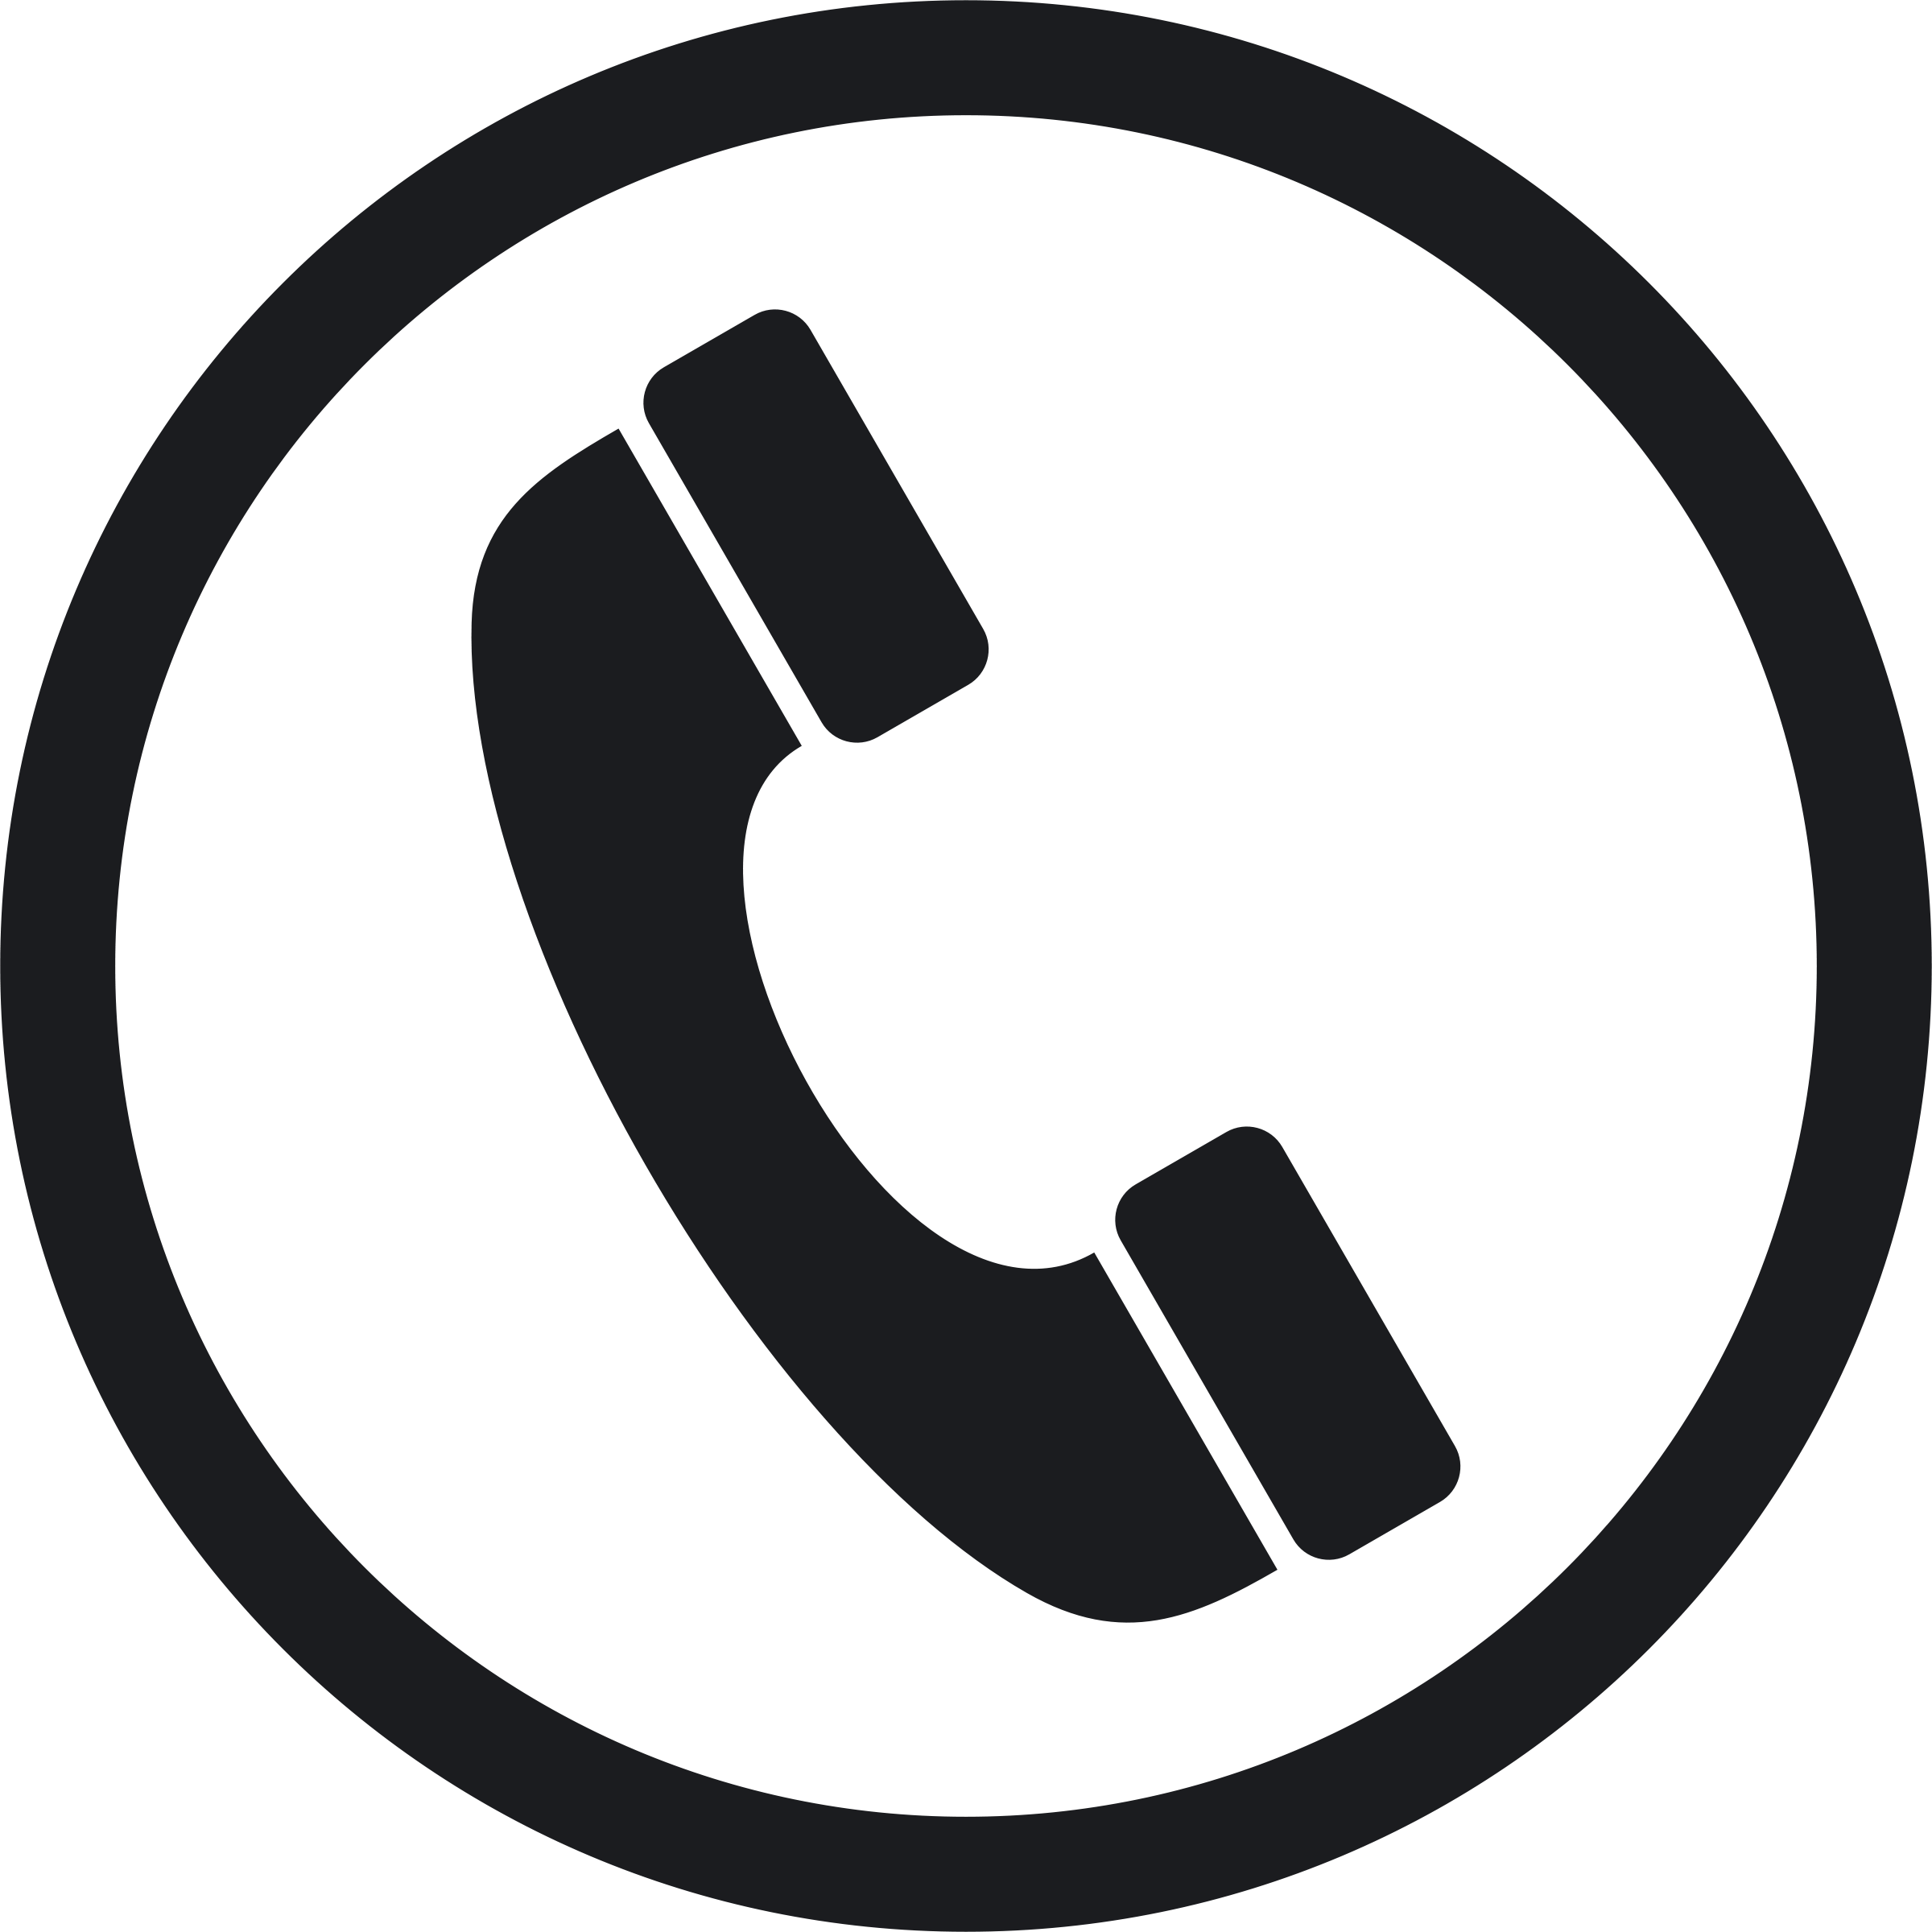 Call Logo - technical | graphic symbol types | Phone icon, Phone logo, Mobile logo